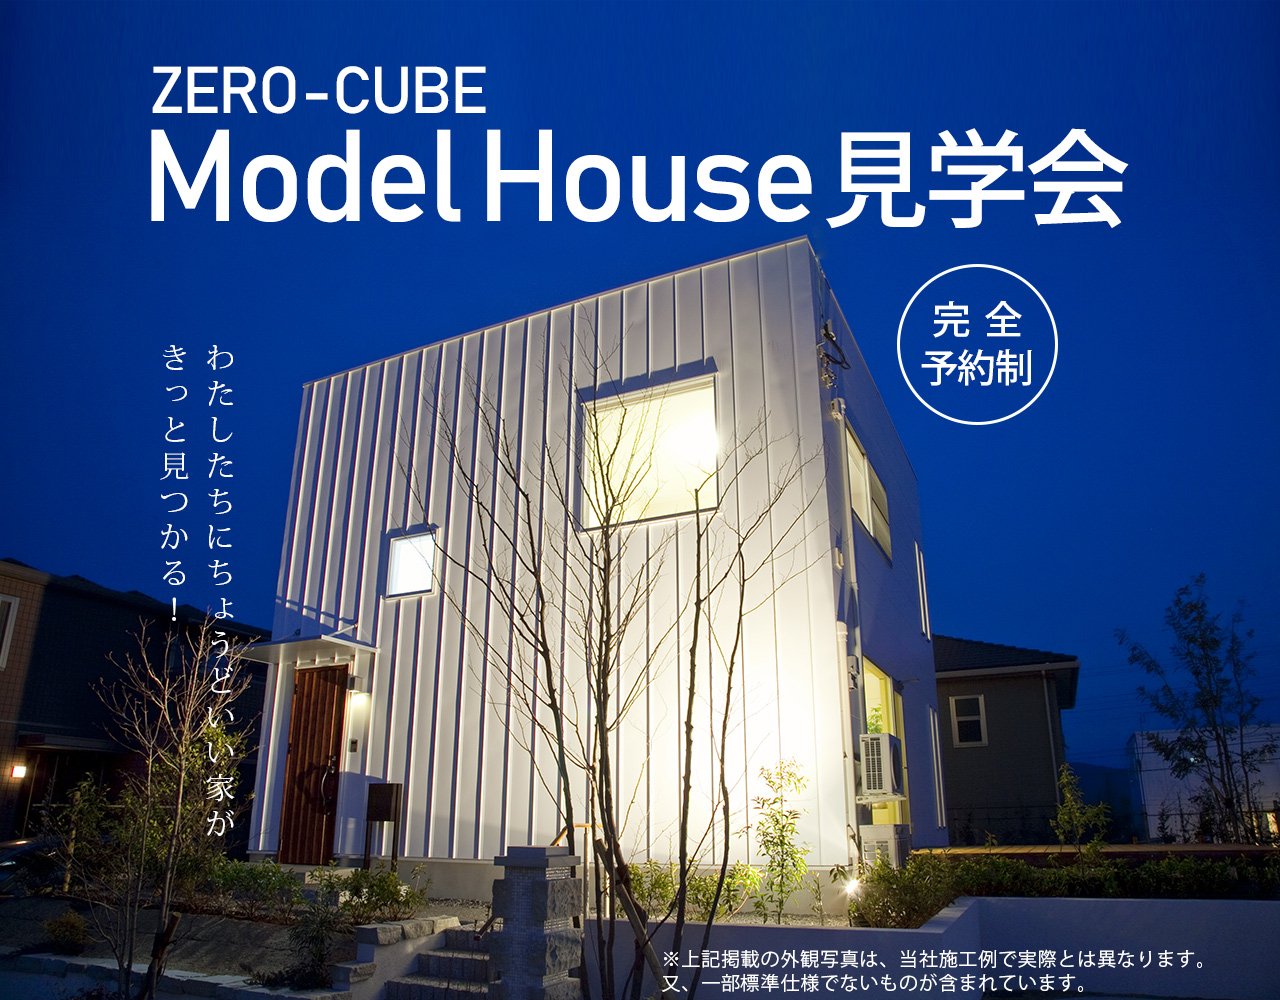 ZERO-CUBE ModelHouse見学会